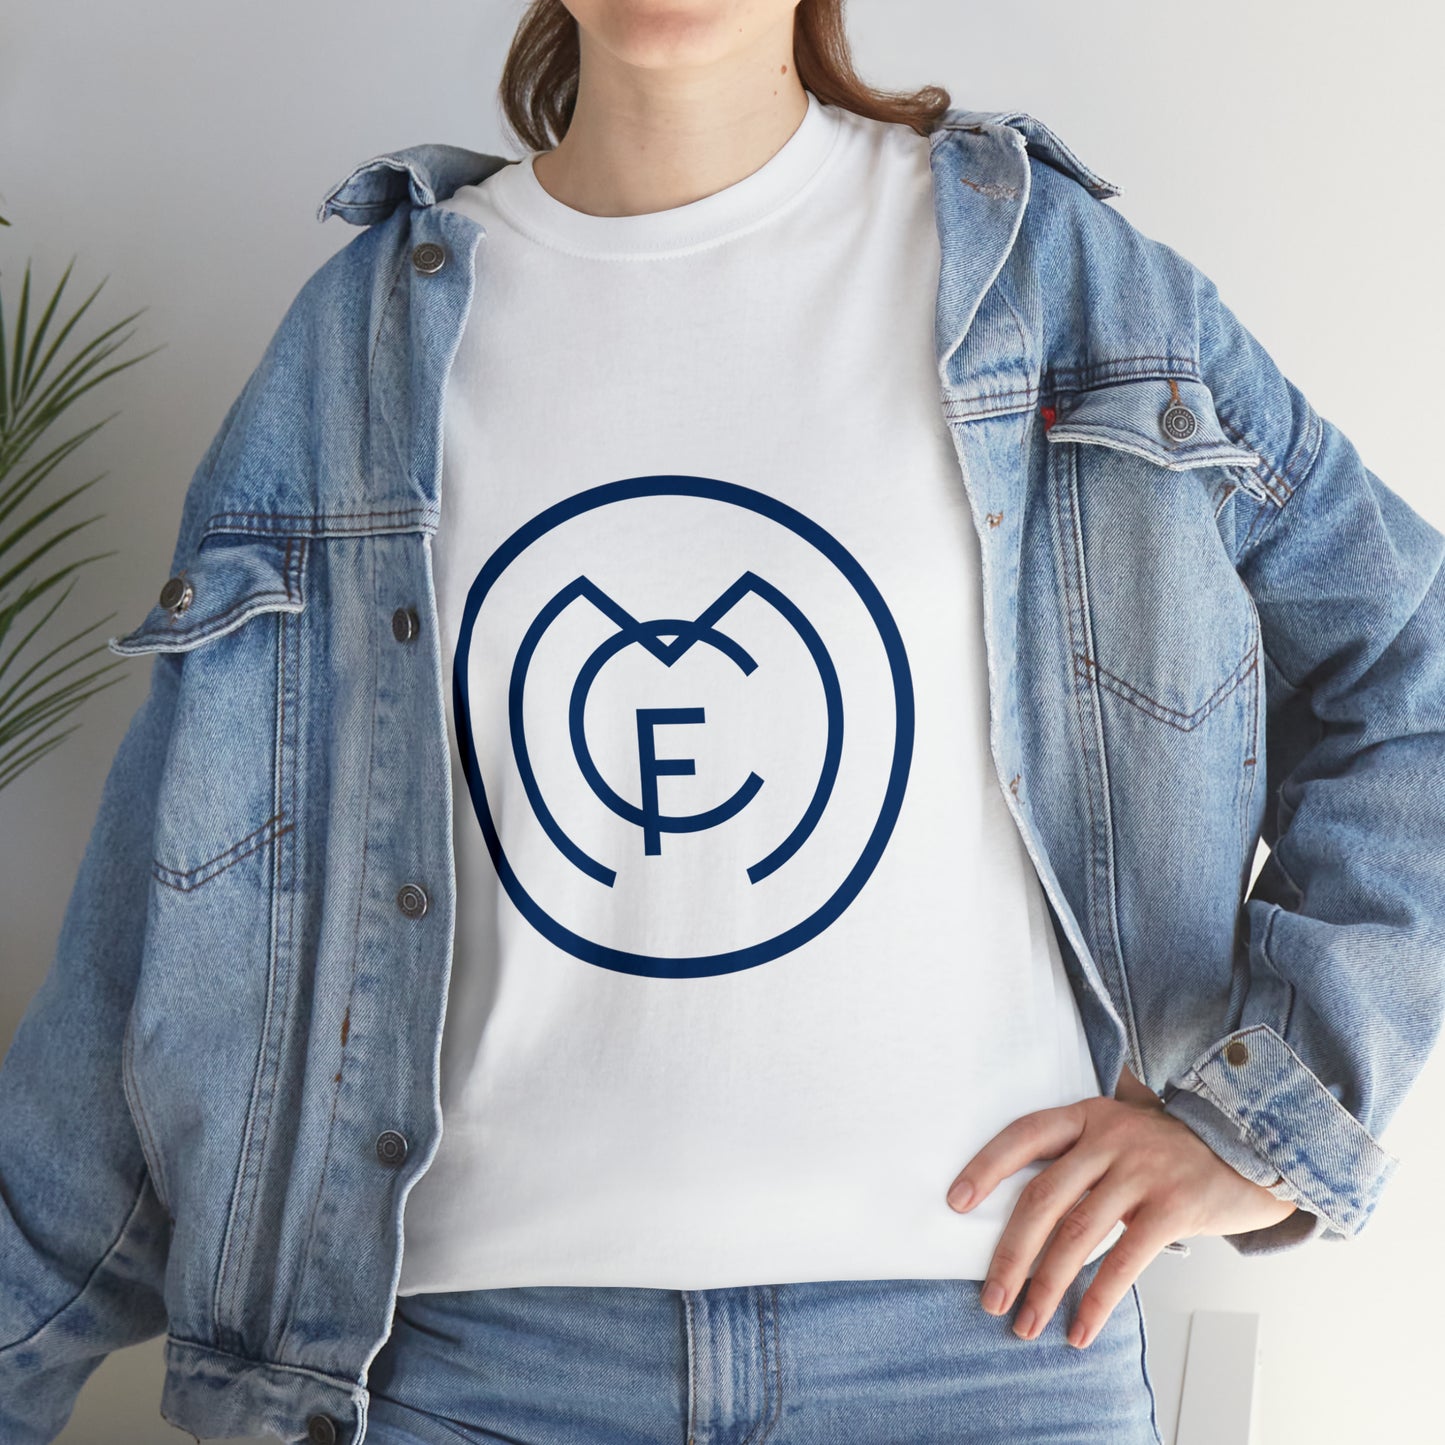 Real Madrid C.F. (old logo) Unisex Heavy Cotton T-shirt